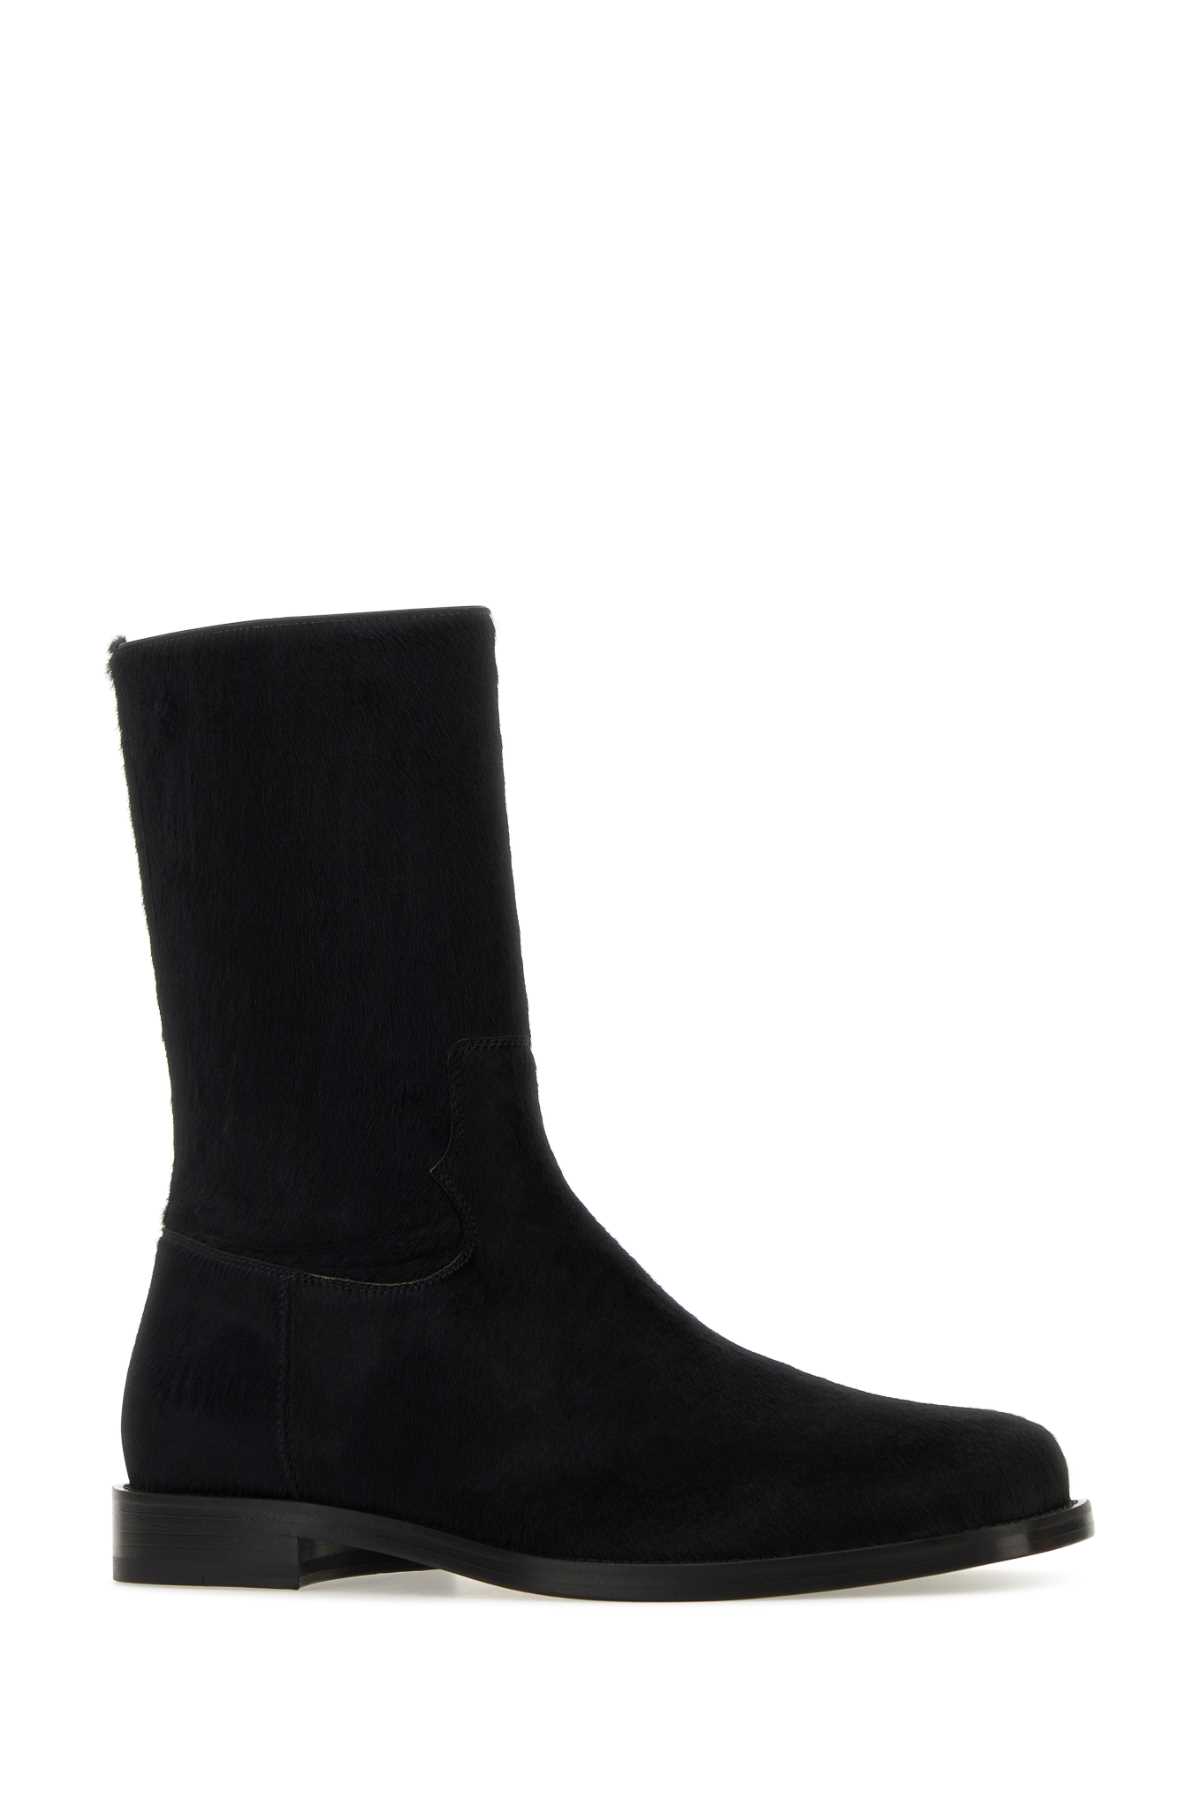 Shop Dries Van Noten Black Calfhair Ankle Boots